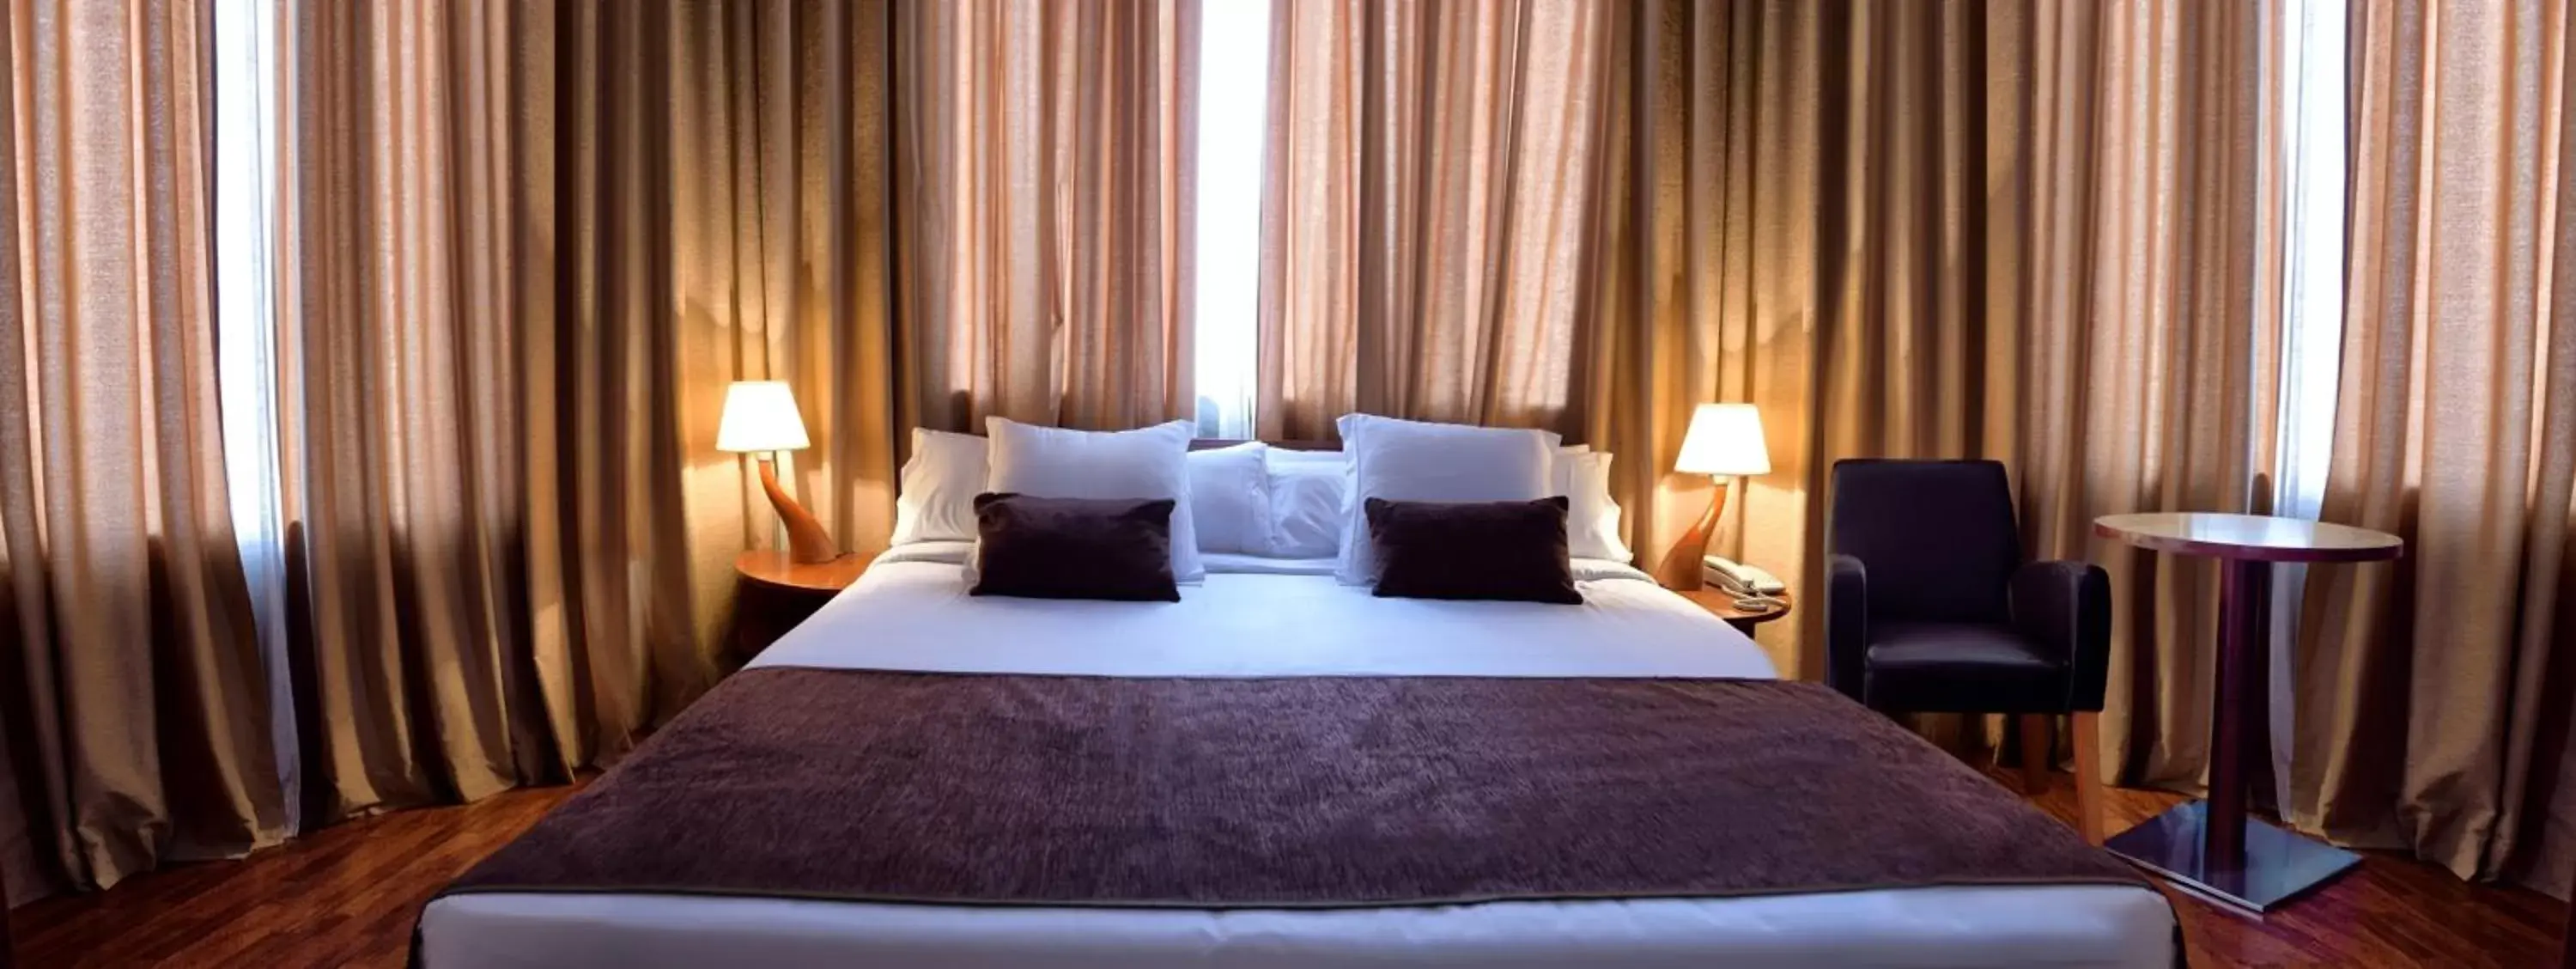 Bed in Hotel HLG CityPark Pelayo